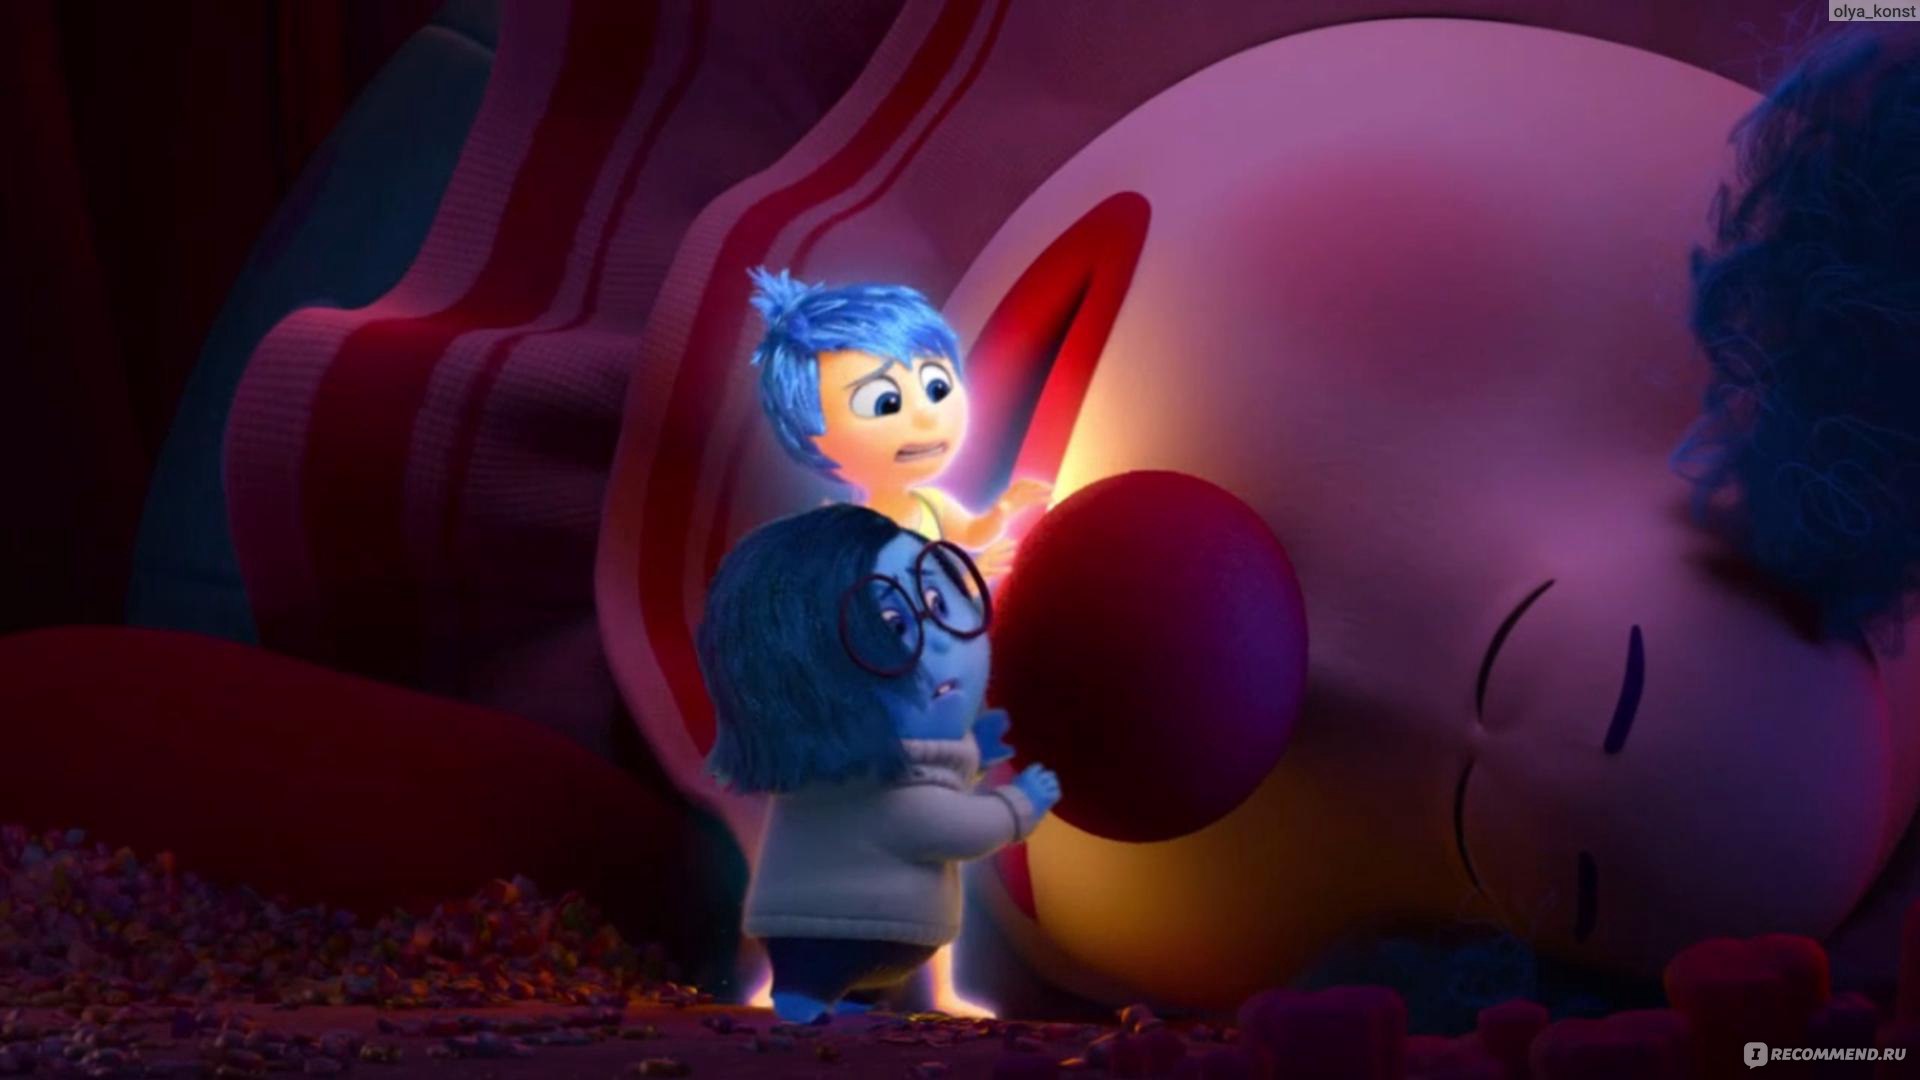 You turn me inside. Головоломка клоун лысик. Наизнанку Pixar.